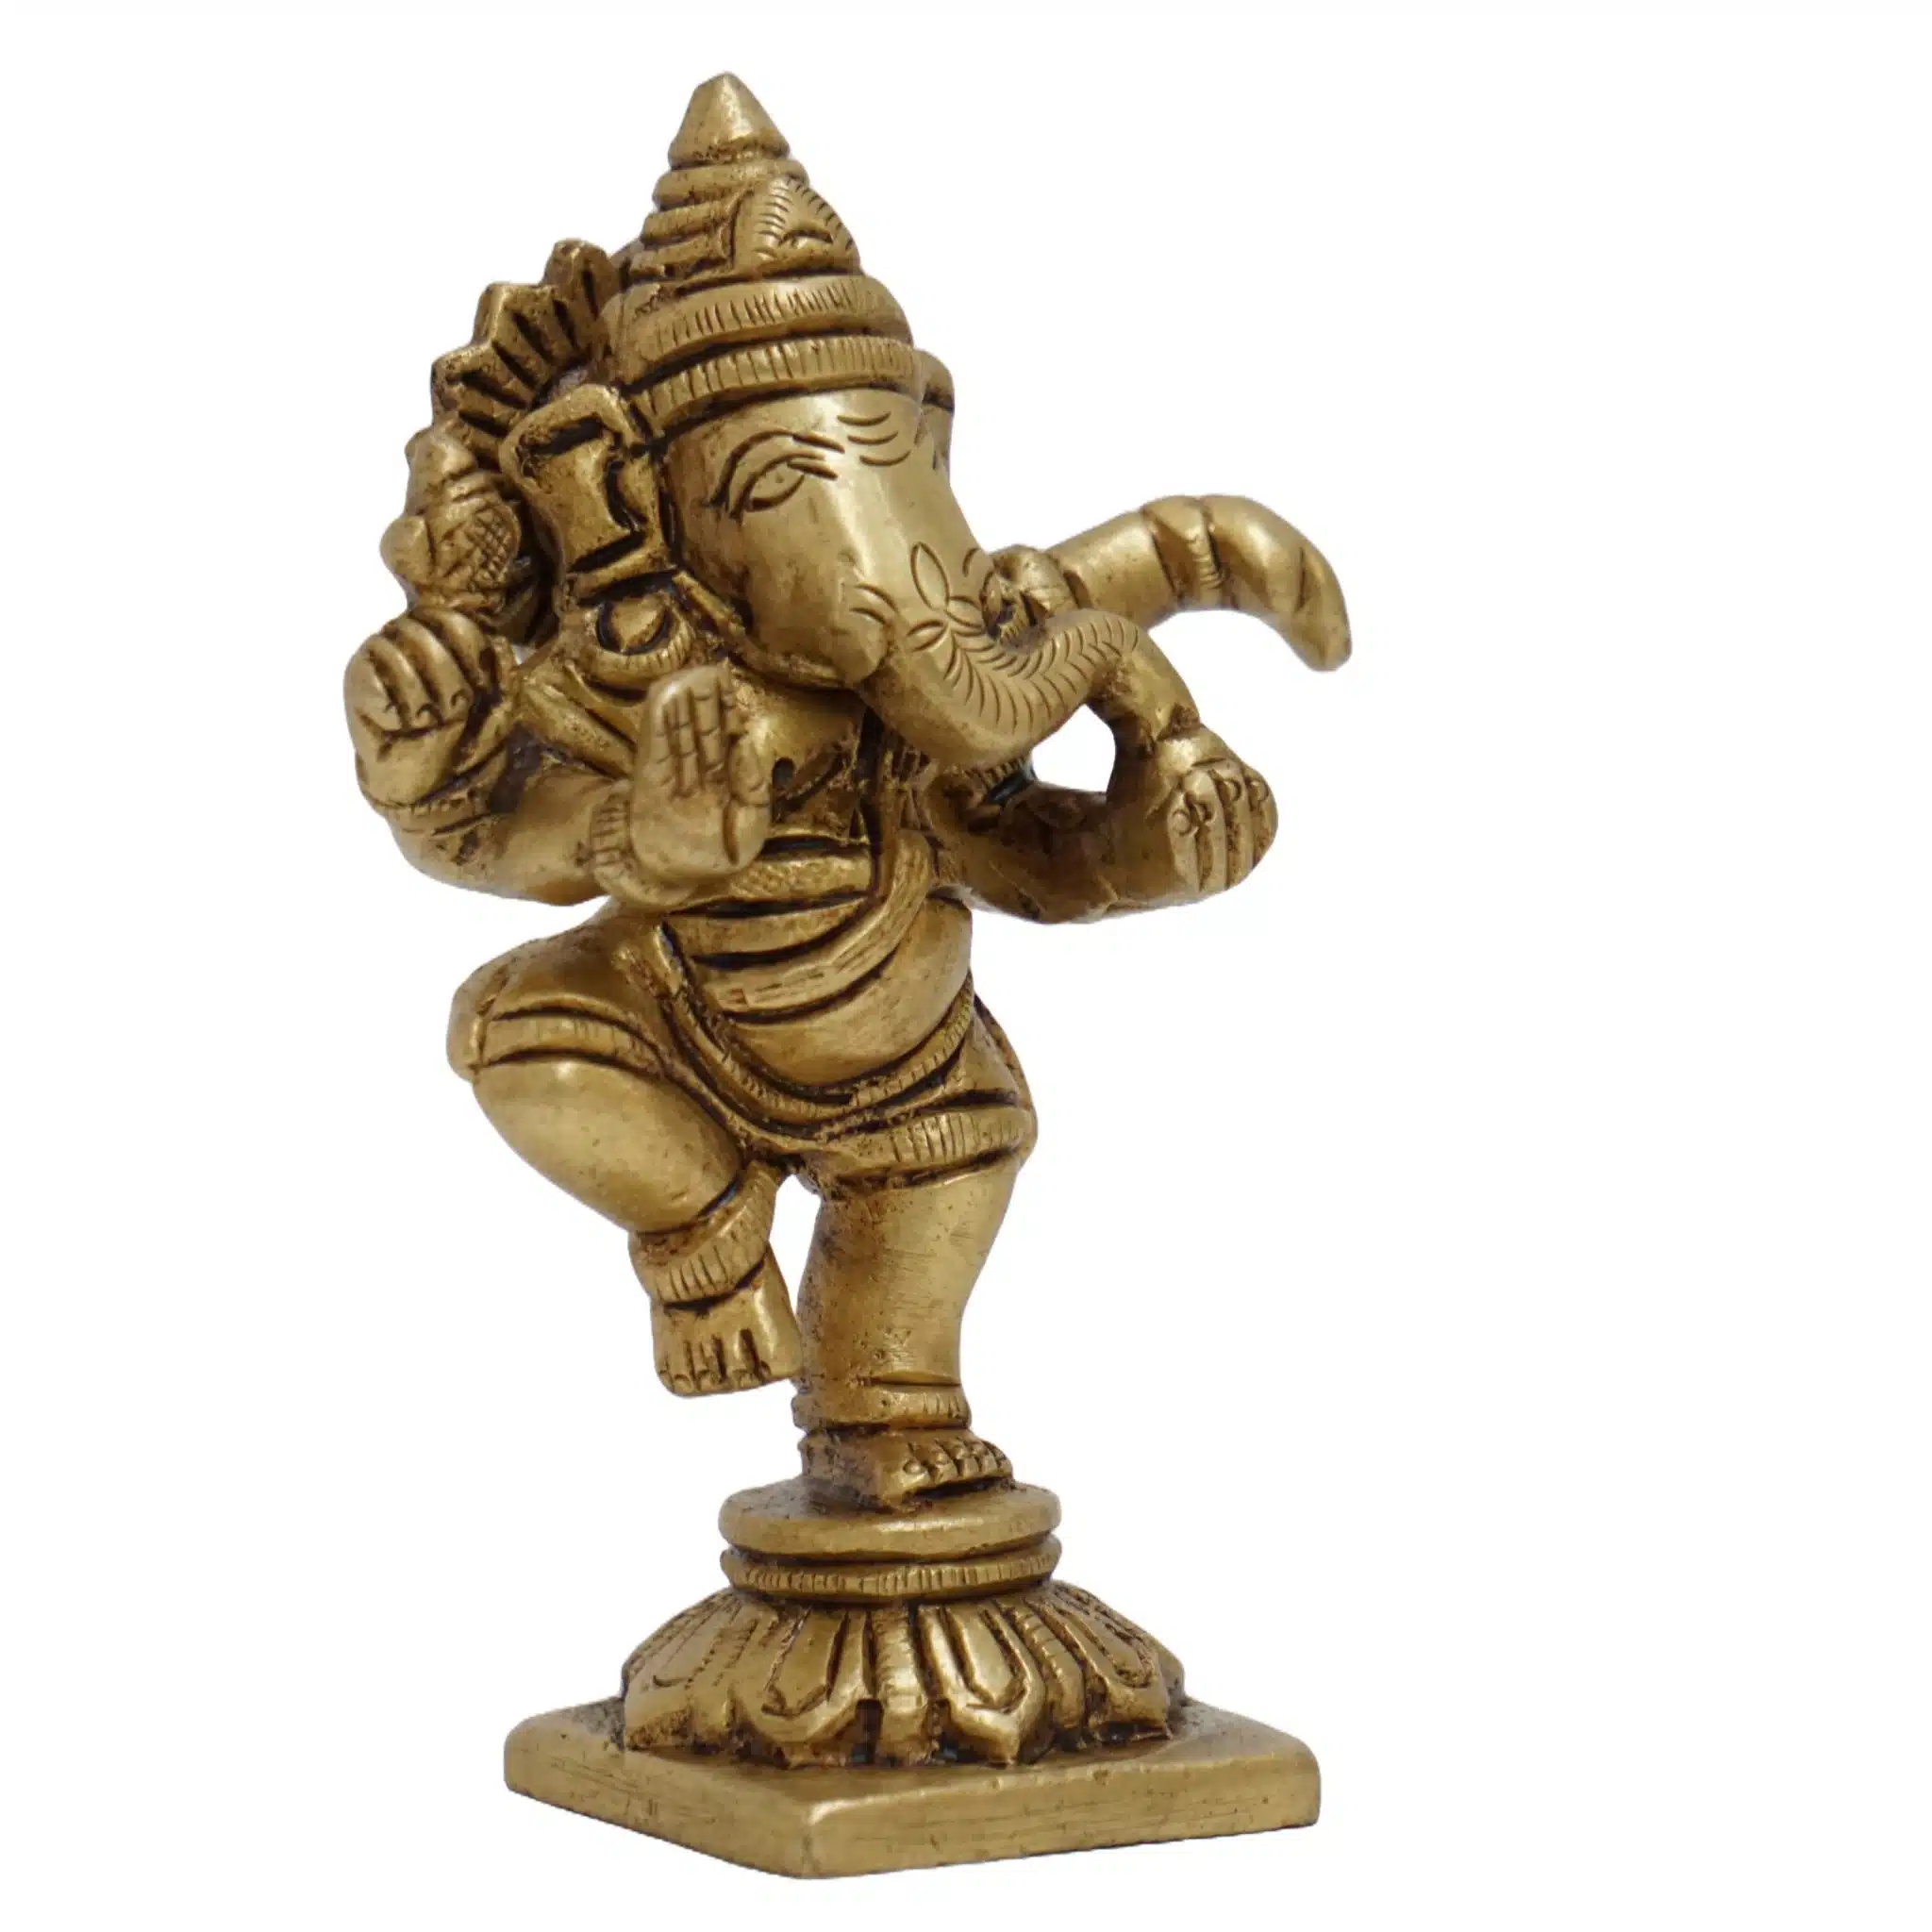 Brass Handicrafts Archives - Buy Indian Handicrafts Online I